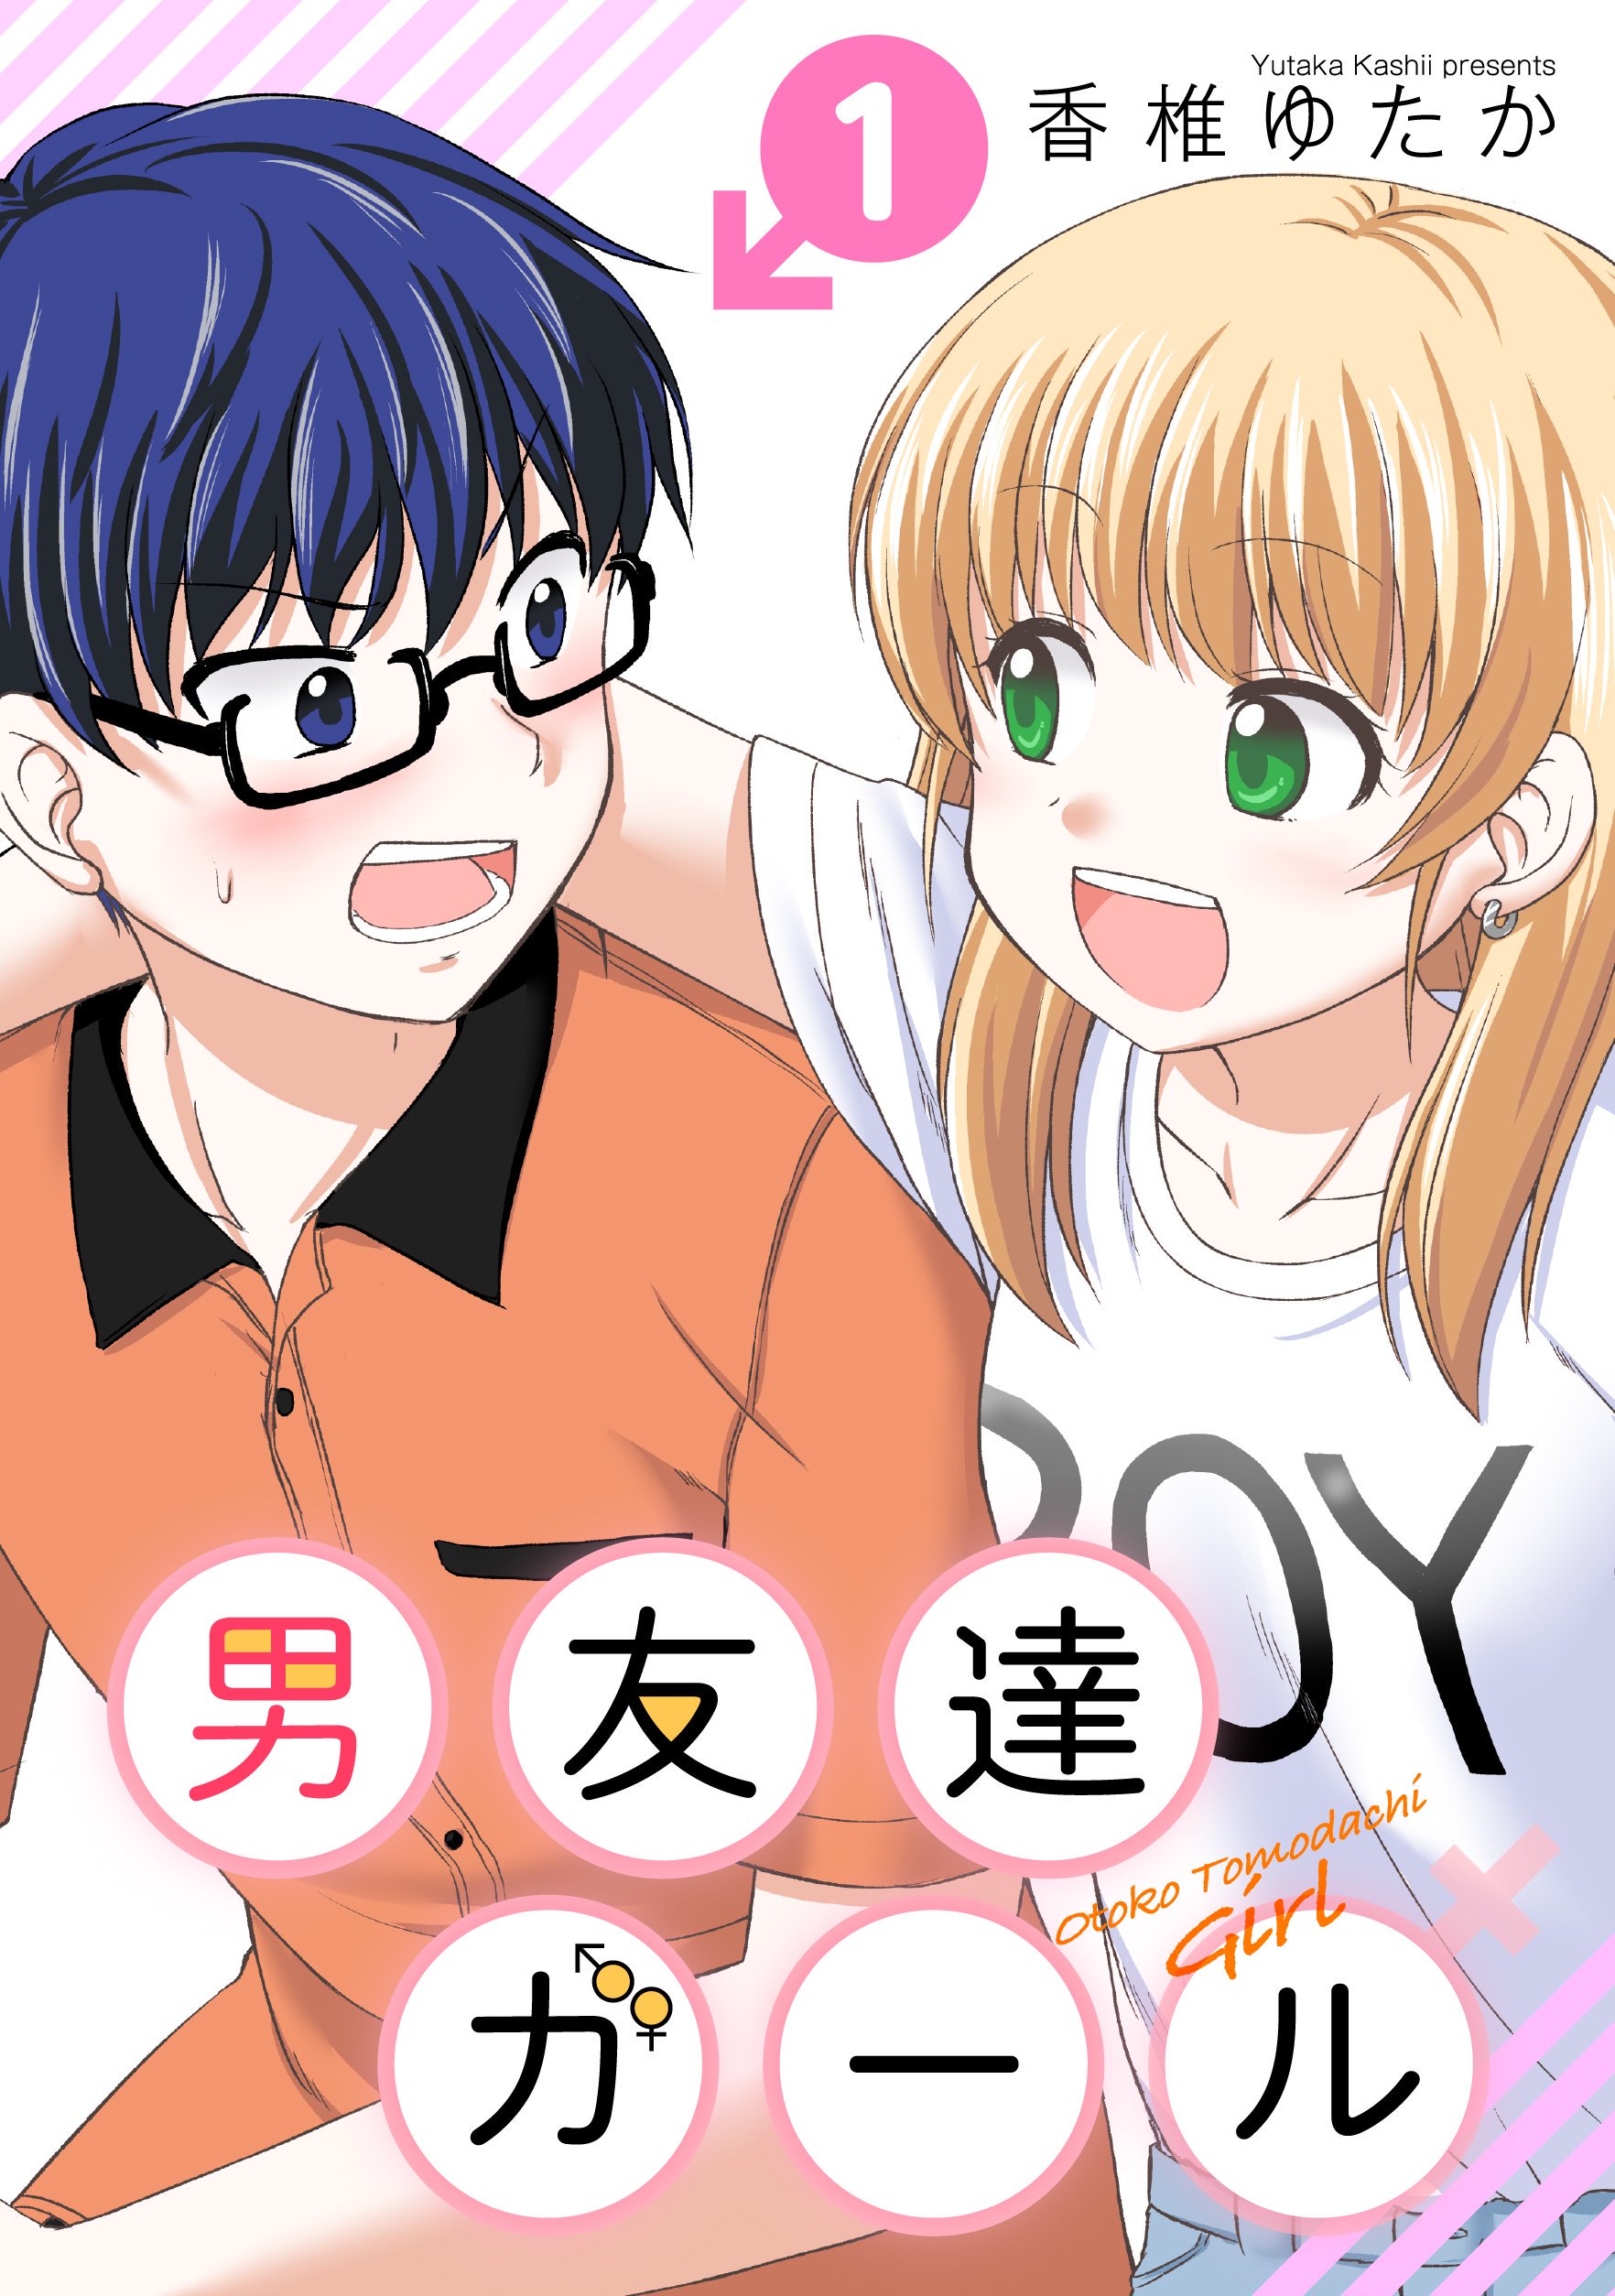 Otoko Tomodachi Girl Manga